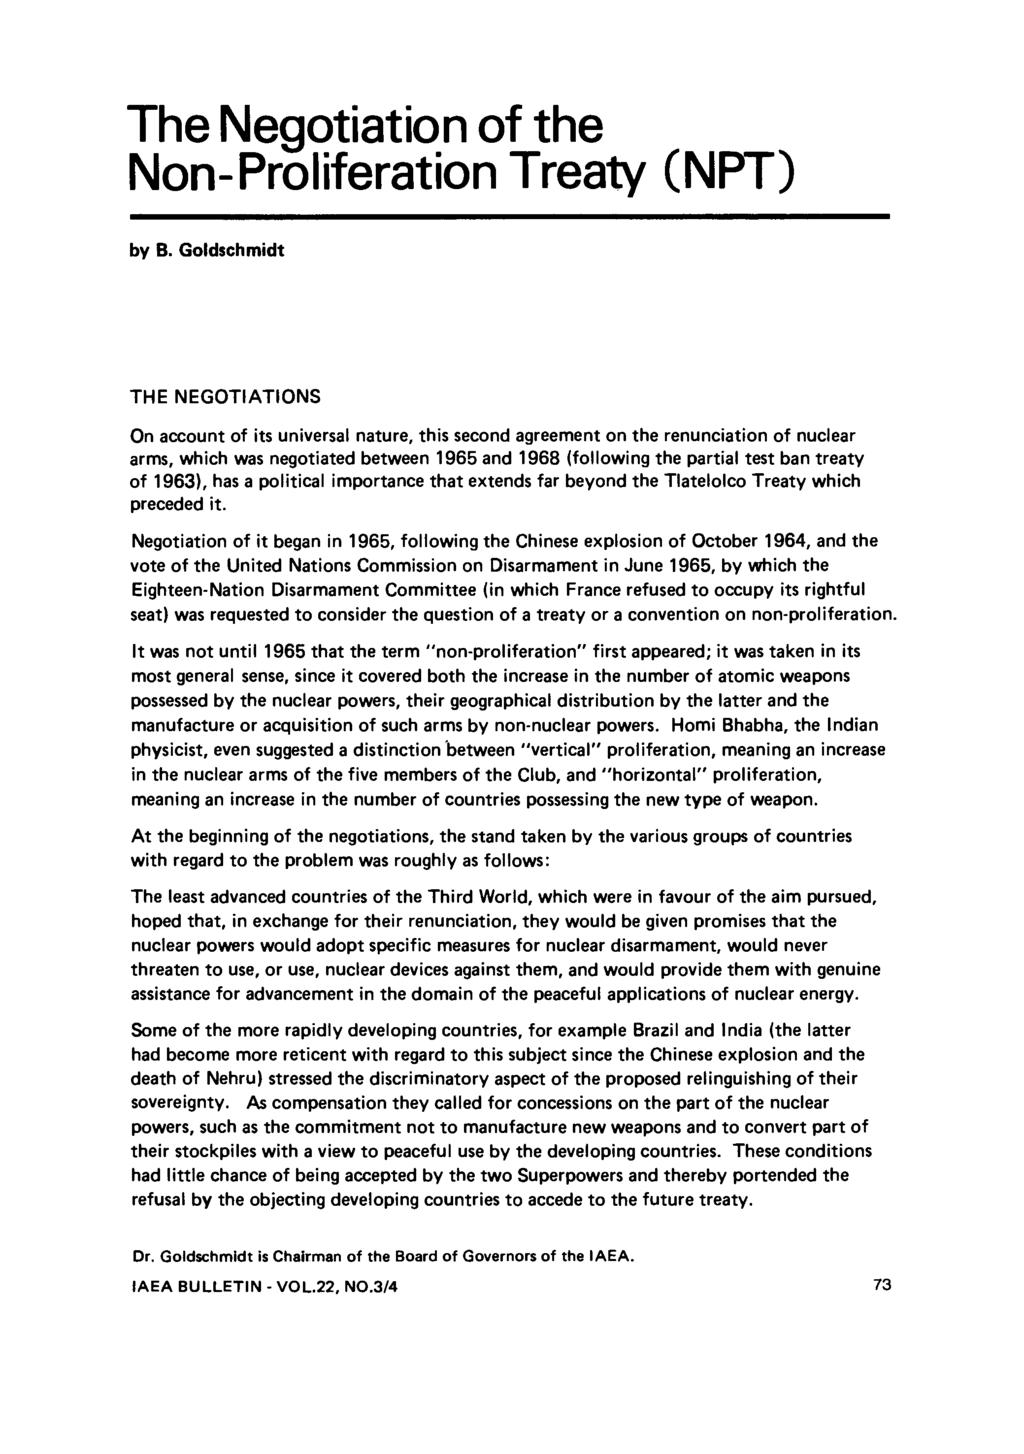 The Negotiation of the Non-Proliferation Treaty (NPT) by B.